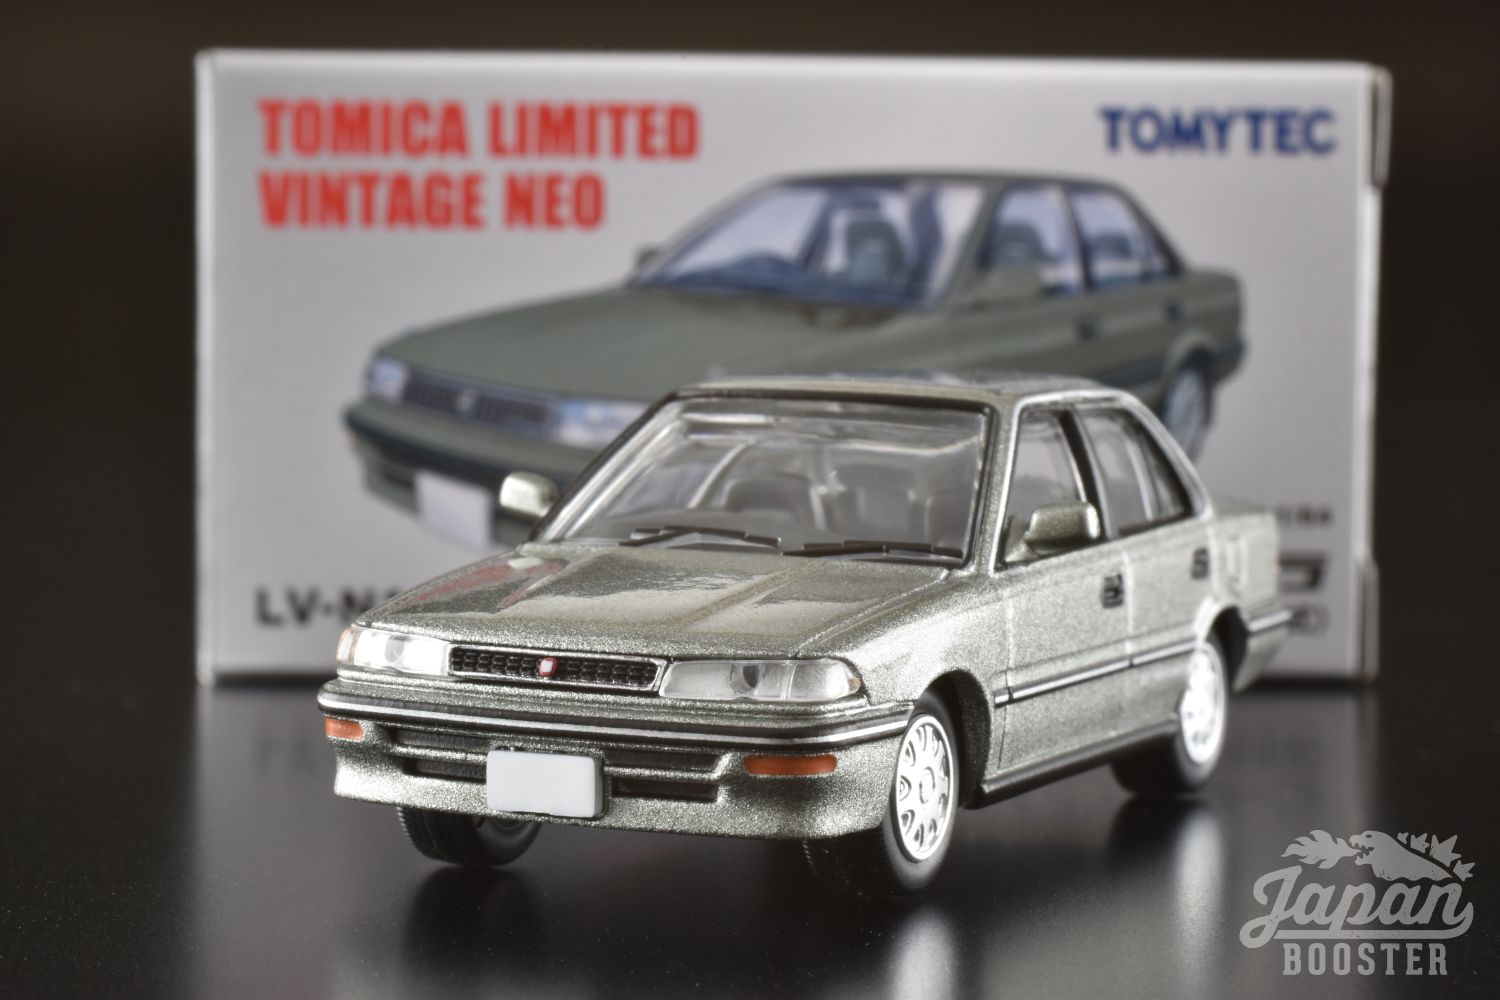 LV Beige Tomytec Tomica Limited Vintage Neo 1//64 Toyota Corolla 1500SE Limited